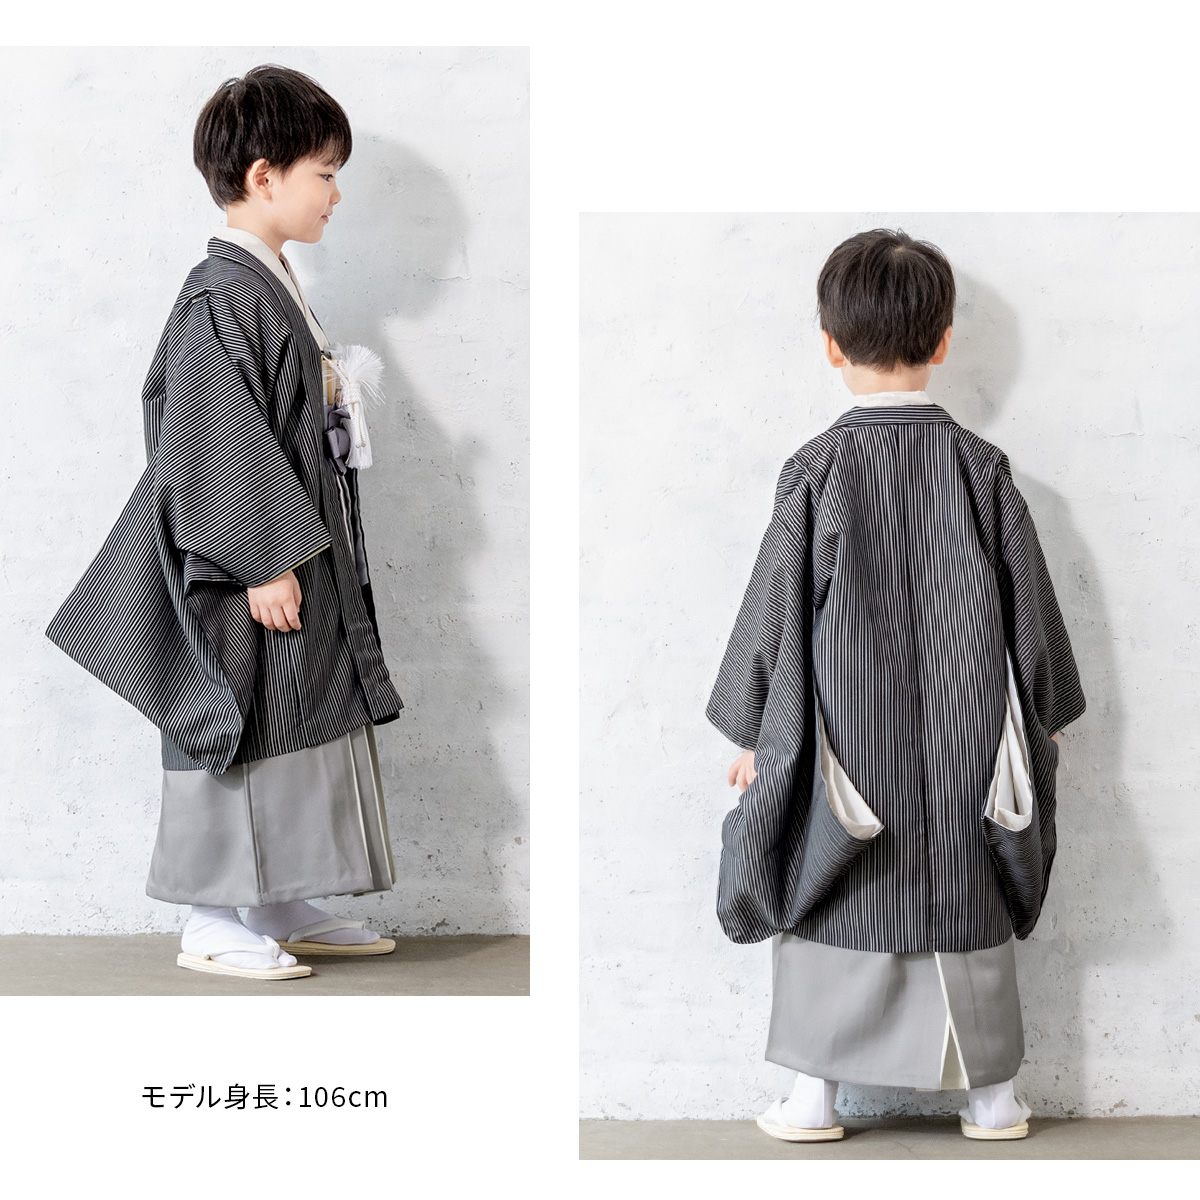 七五三 着物 5歳 販売 五歳 着物 男の子 袴 黒 灰色系 ベージュ系 縞